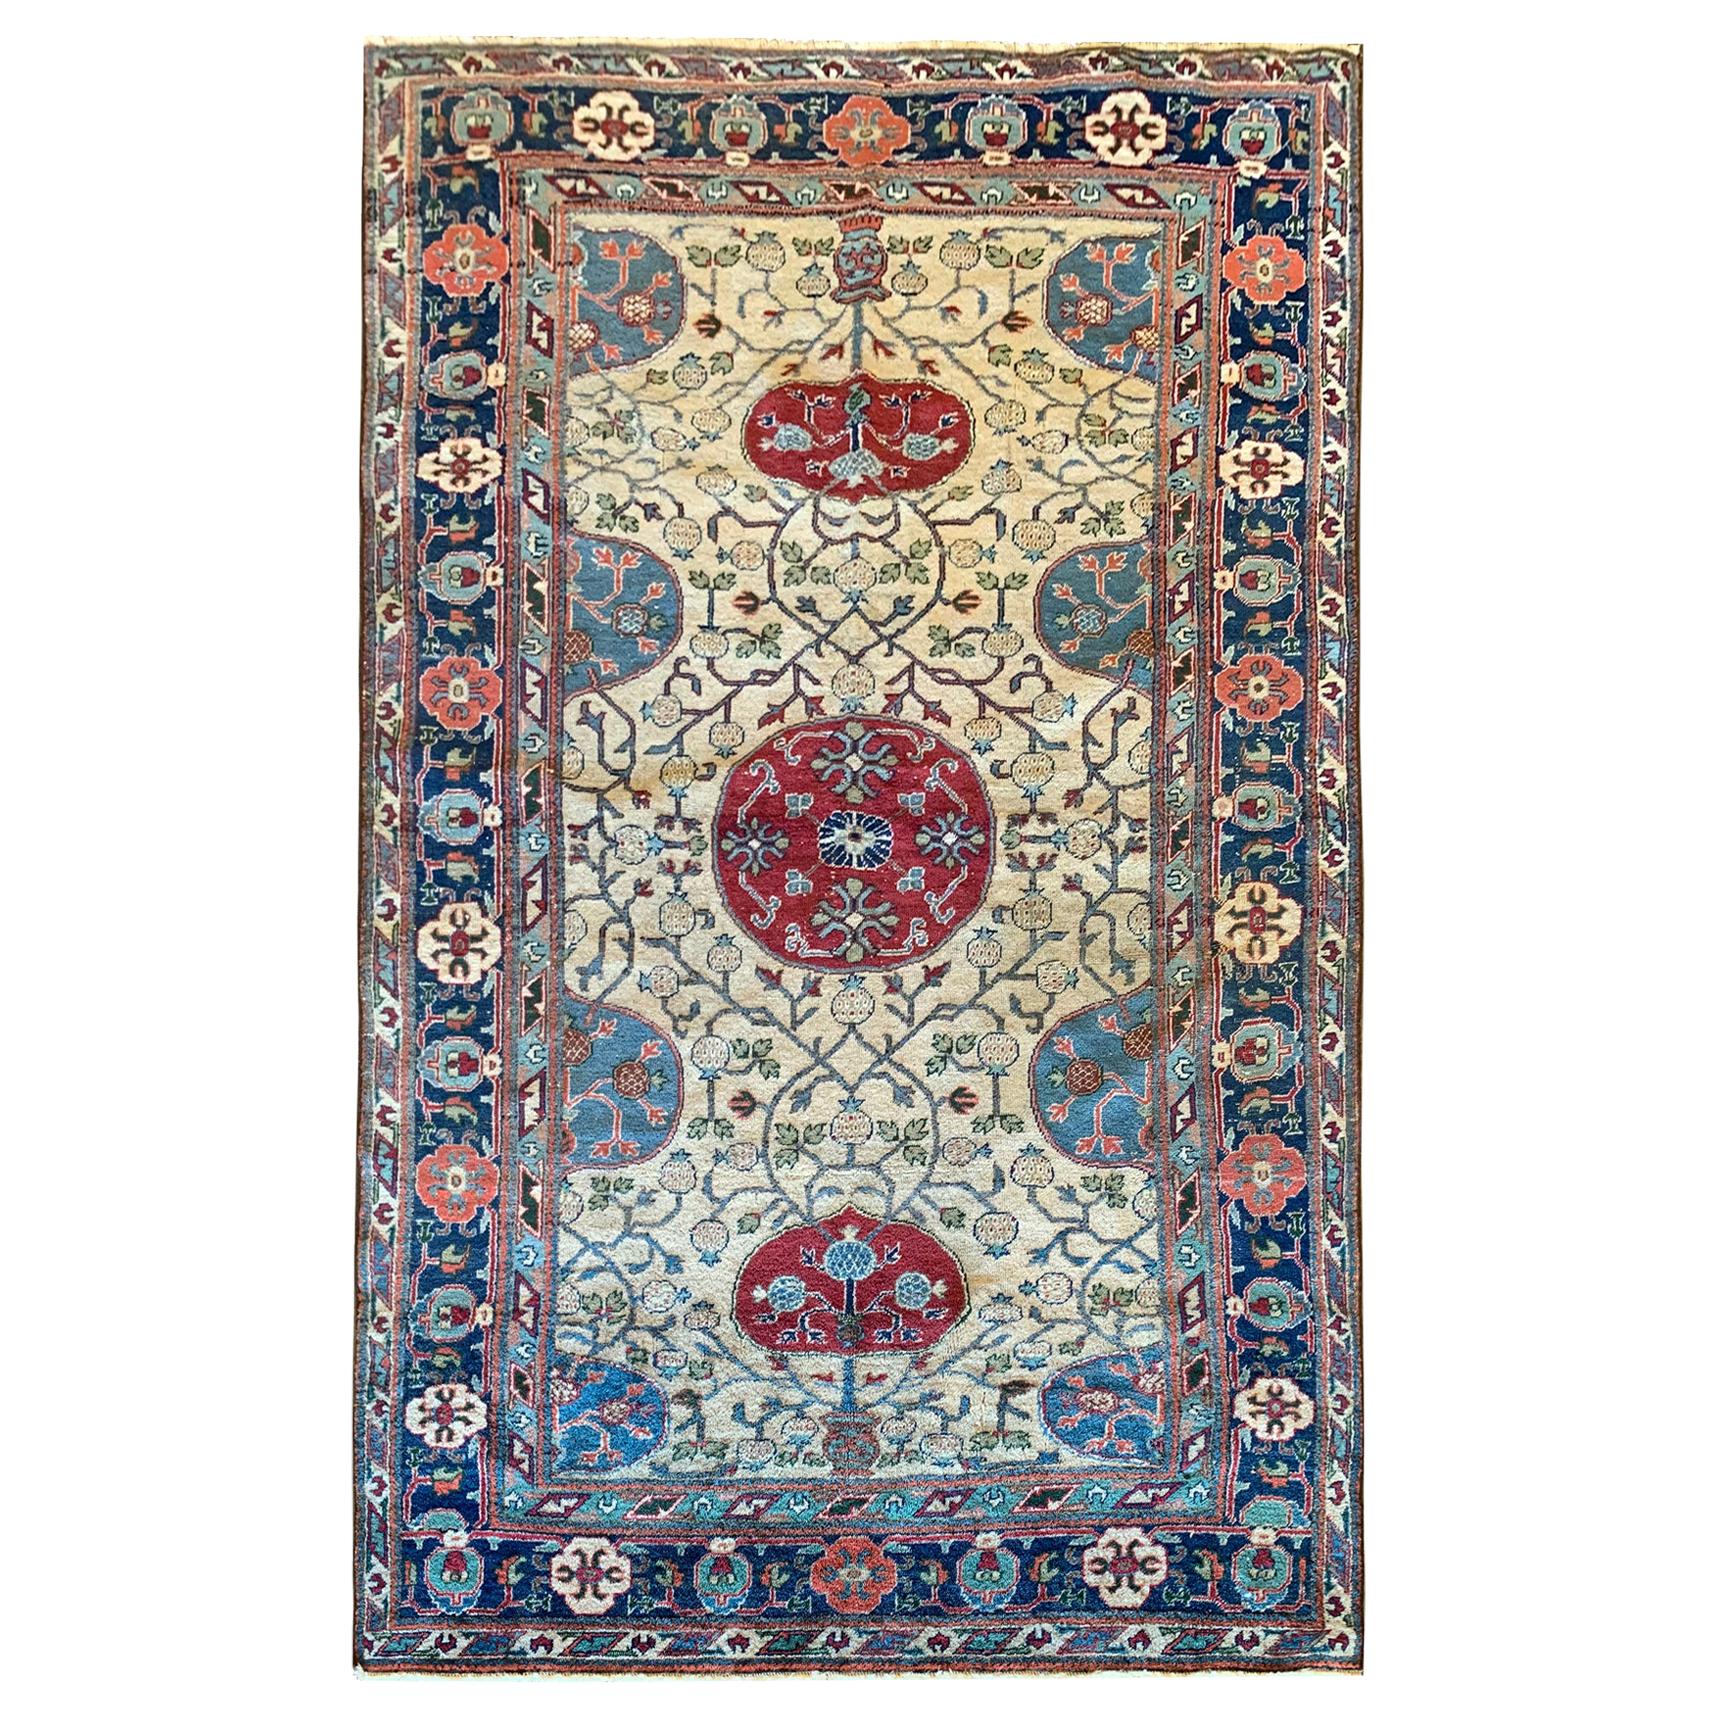 Antique Rugs Central Asian Khotan Carpet Handmade Oriental Area Rug